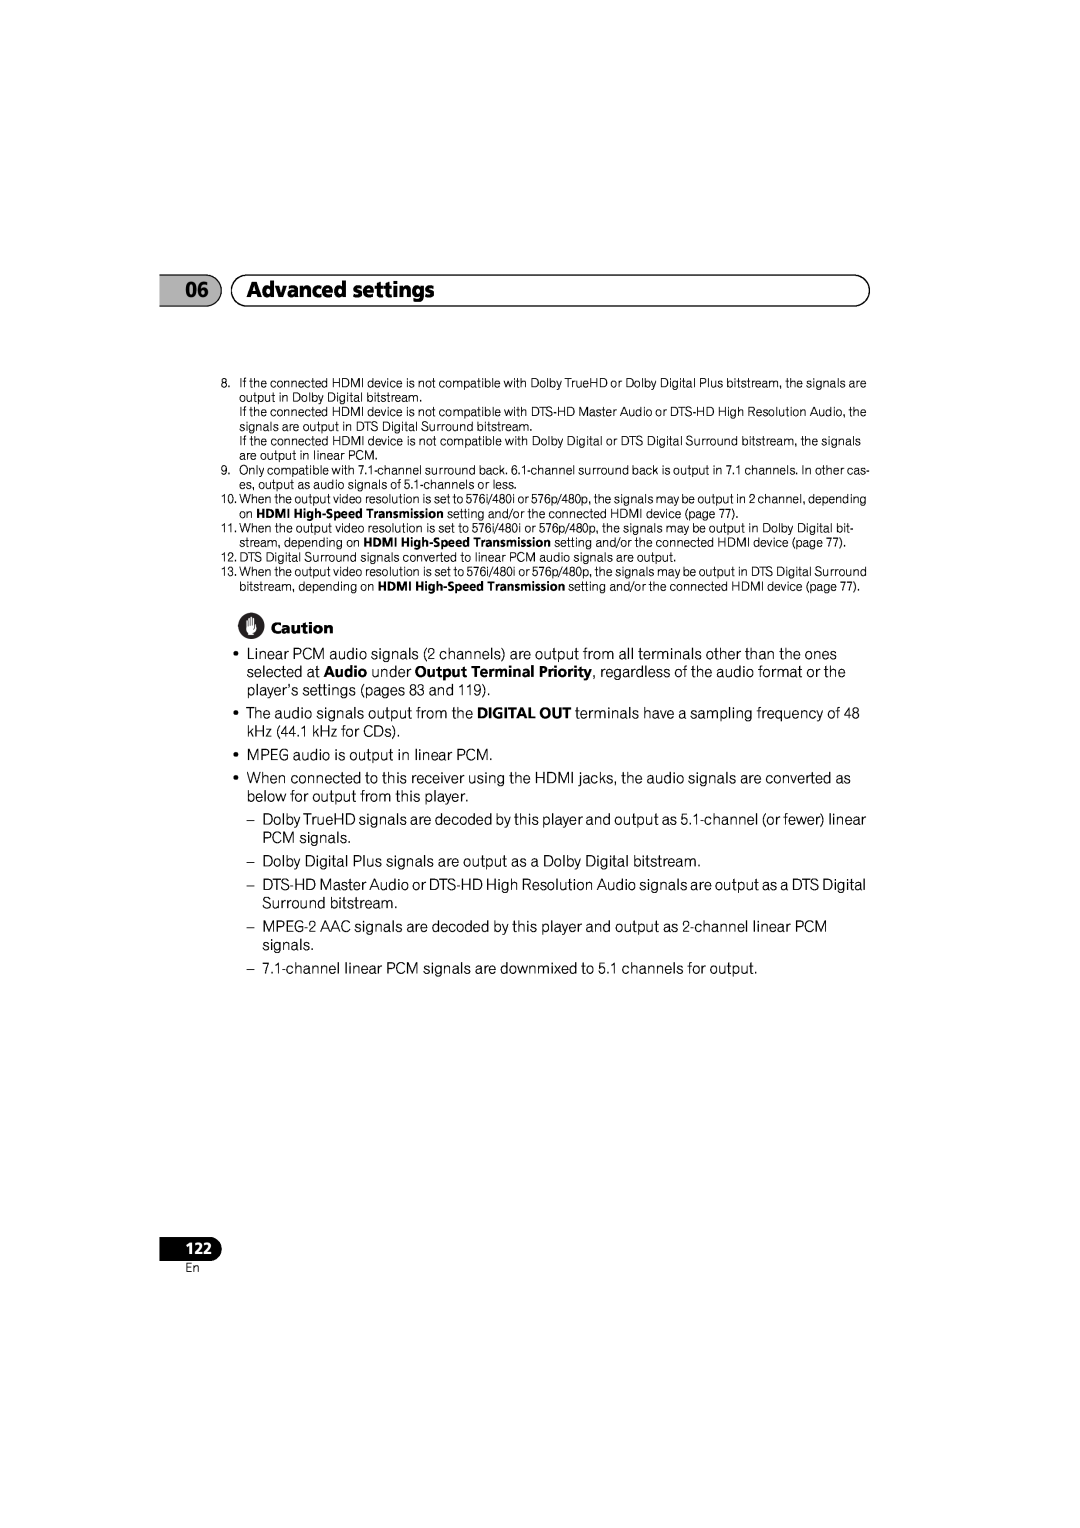 Pioneer SX-LX03 manual 06Advanced settings 